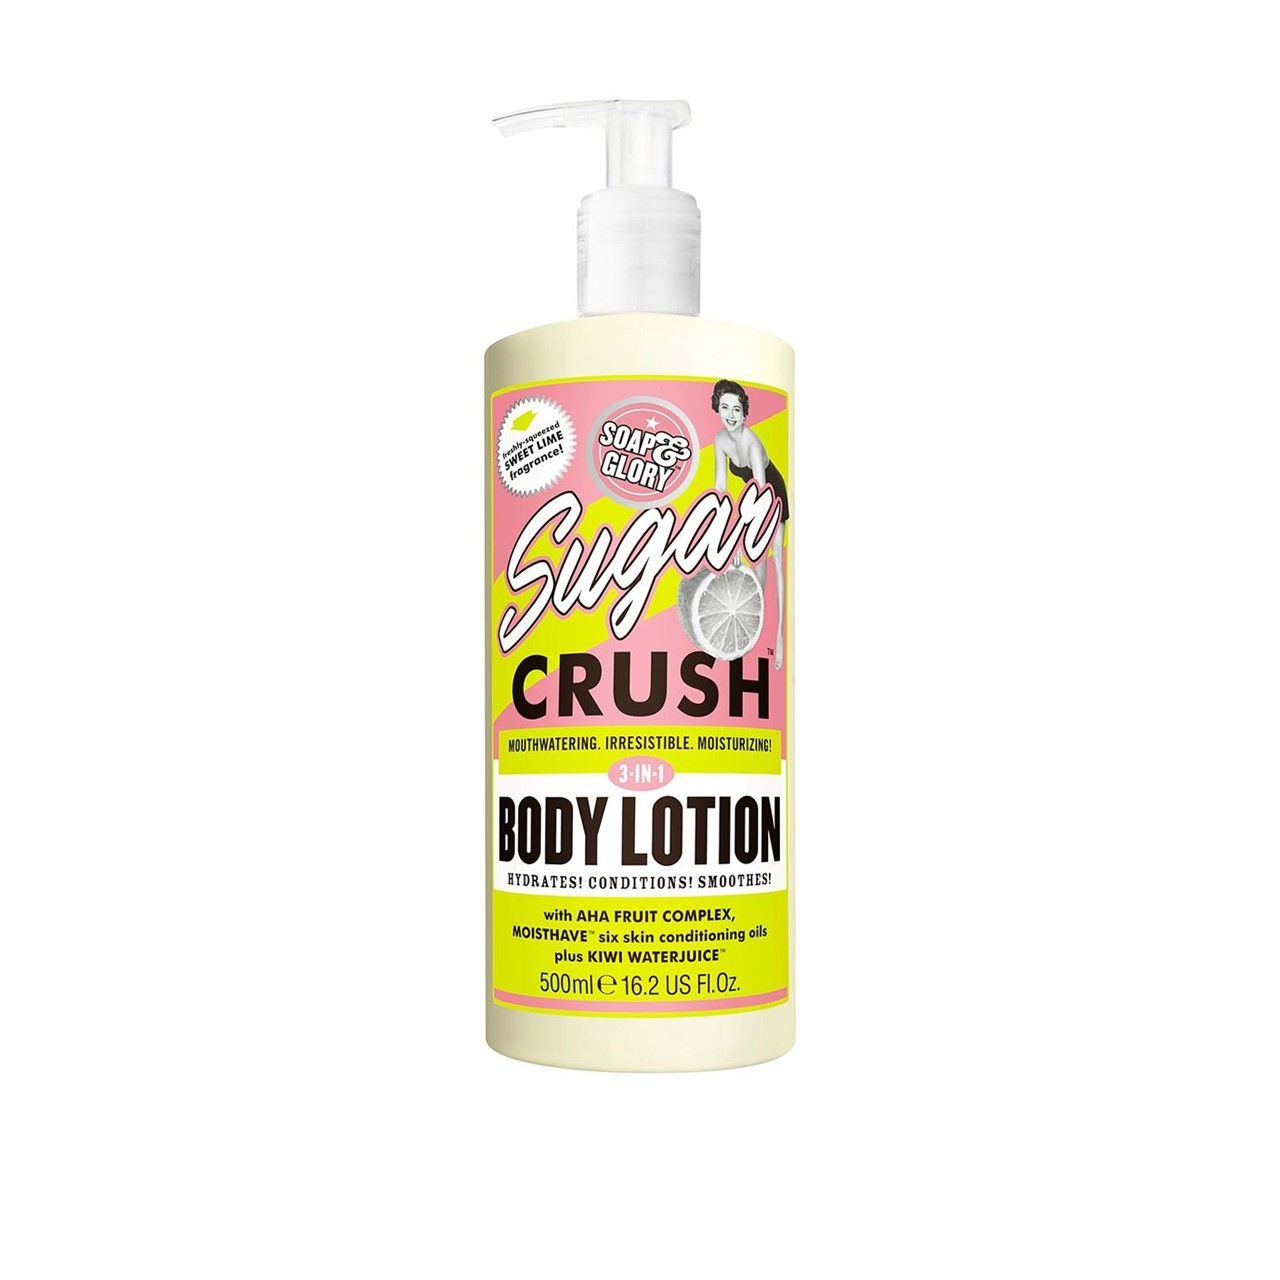 Soap & Glory Sugar Crush Moisturizing Body Lotion 500ml (16.2 fl oz)